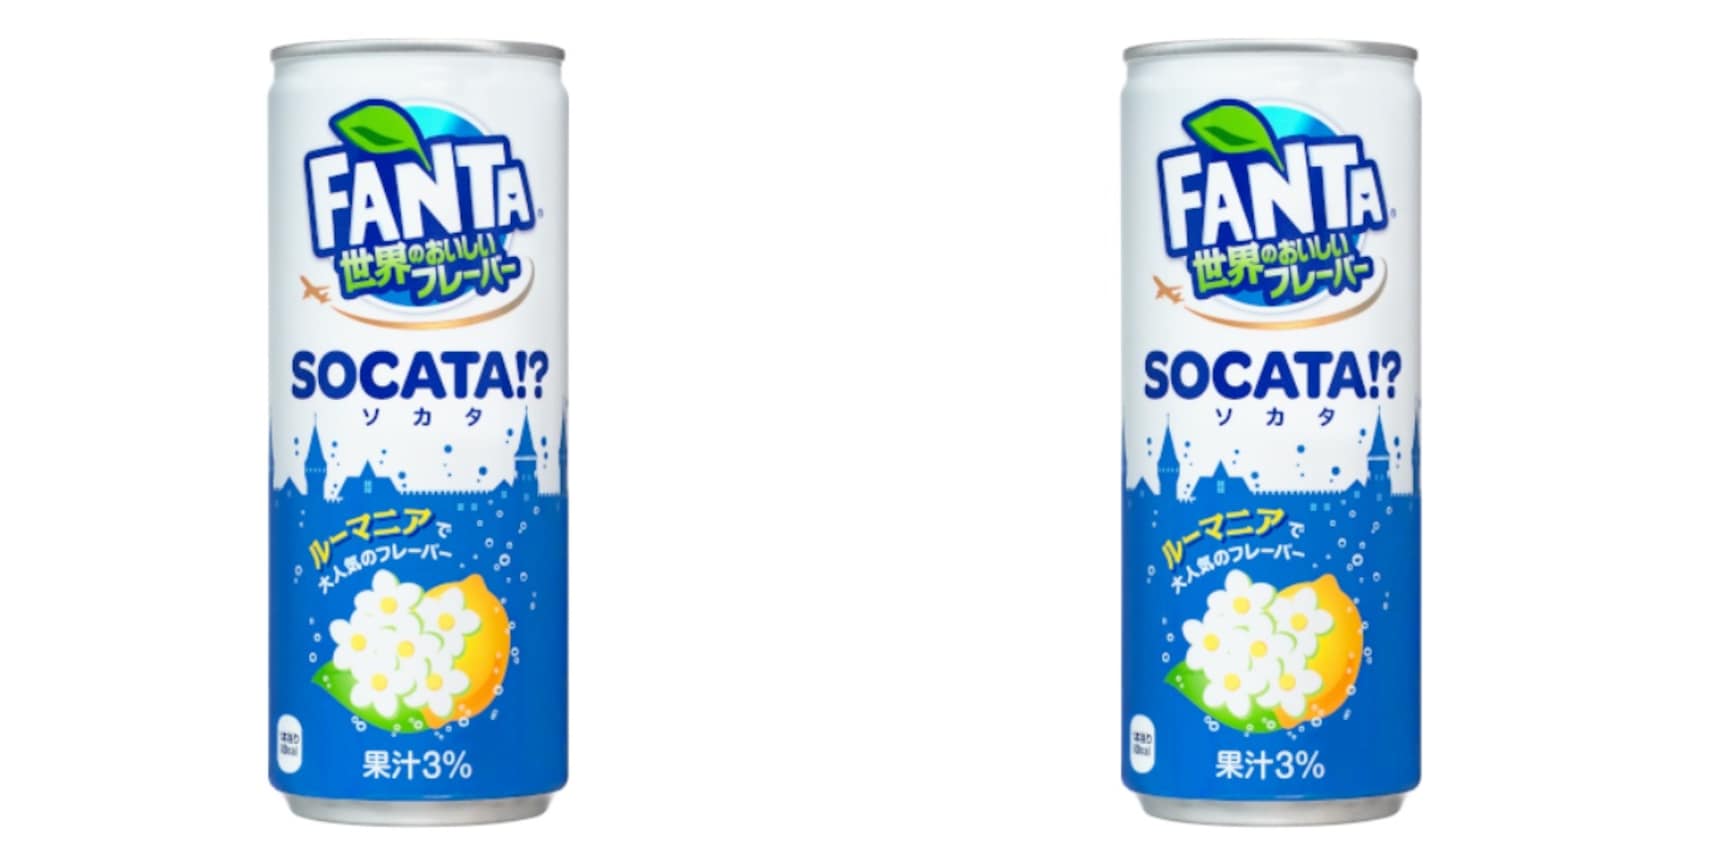 New Japan-Exclusive Seasonal Fanta Flavor